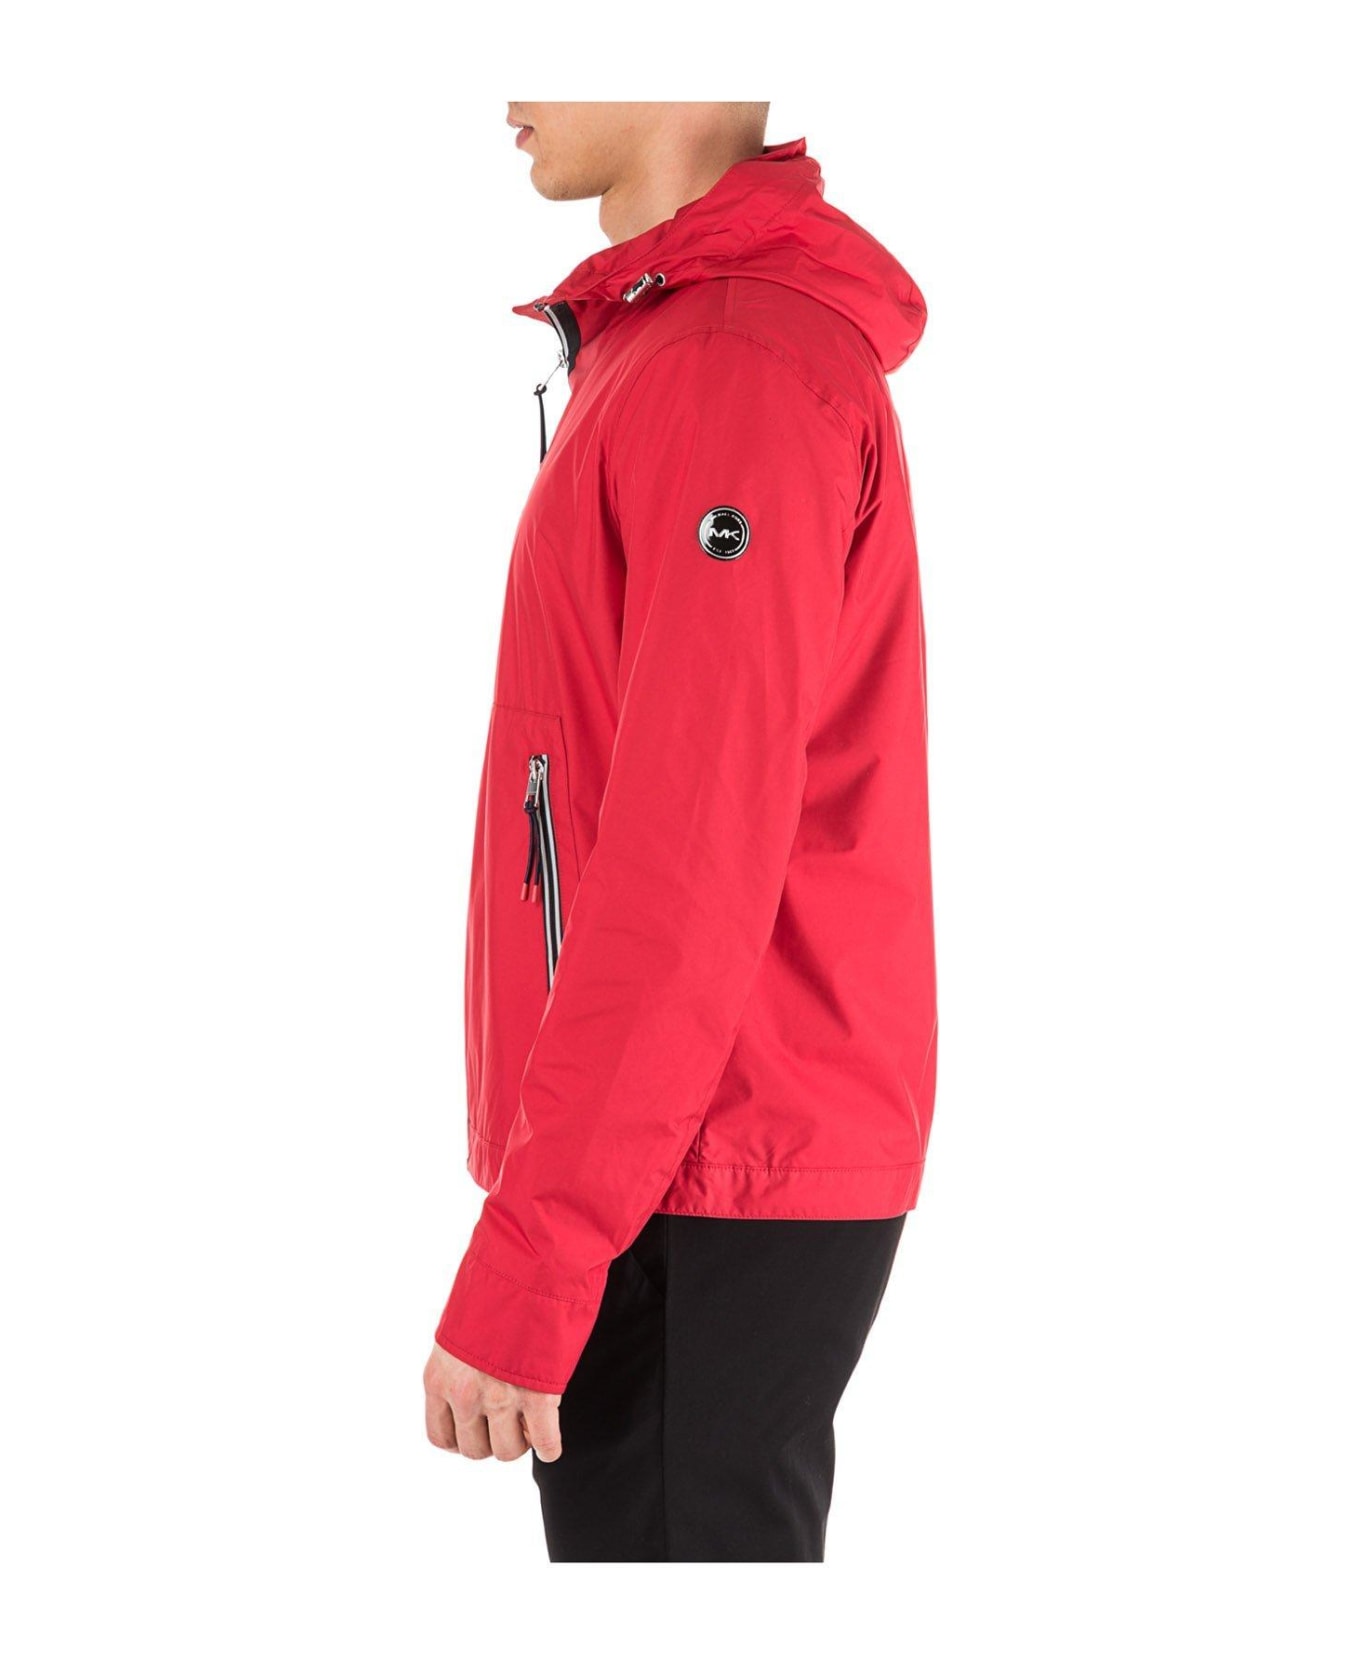 Michael Kors Tech Hooded Zip Jacket - red